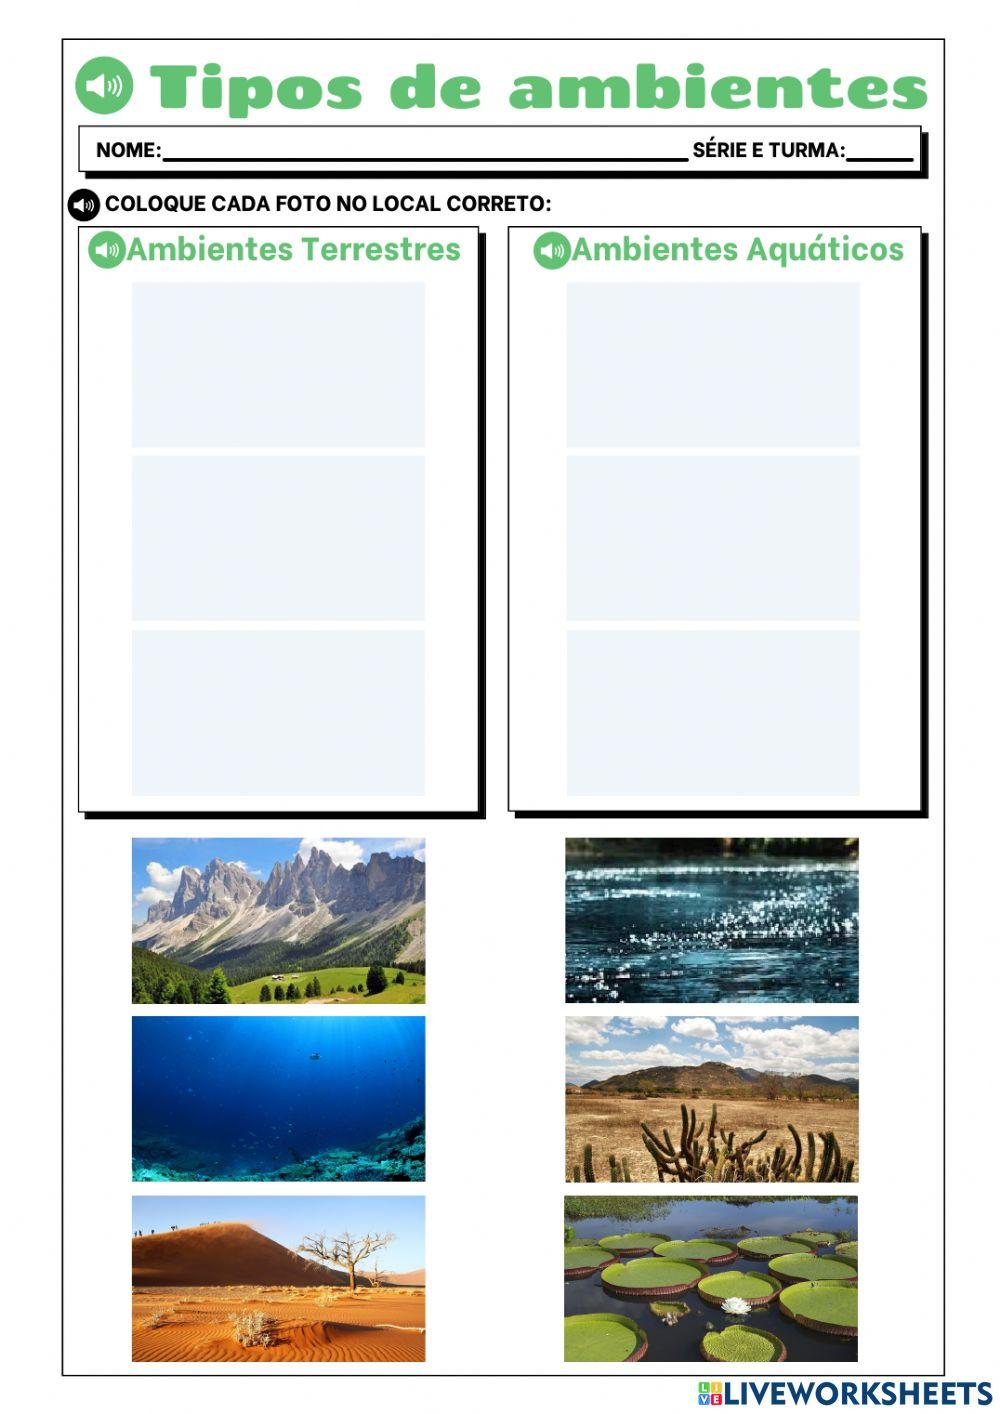 Ambientes do Planeta Terra interactive worksheet | Live Worksheets